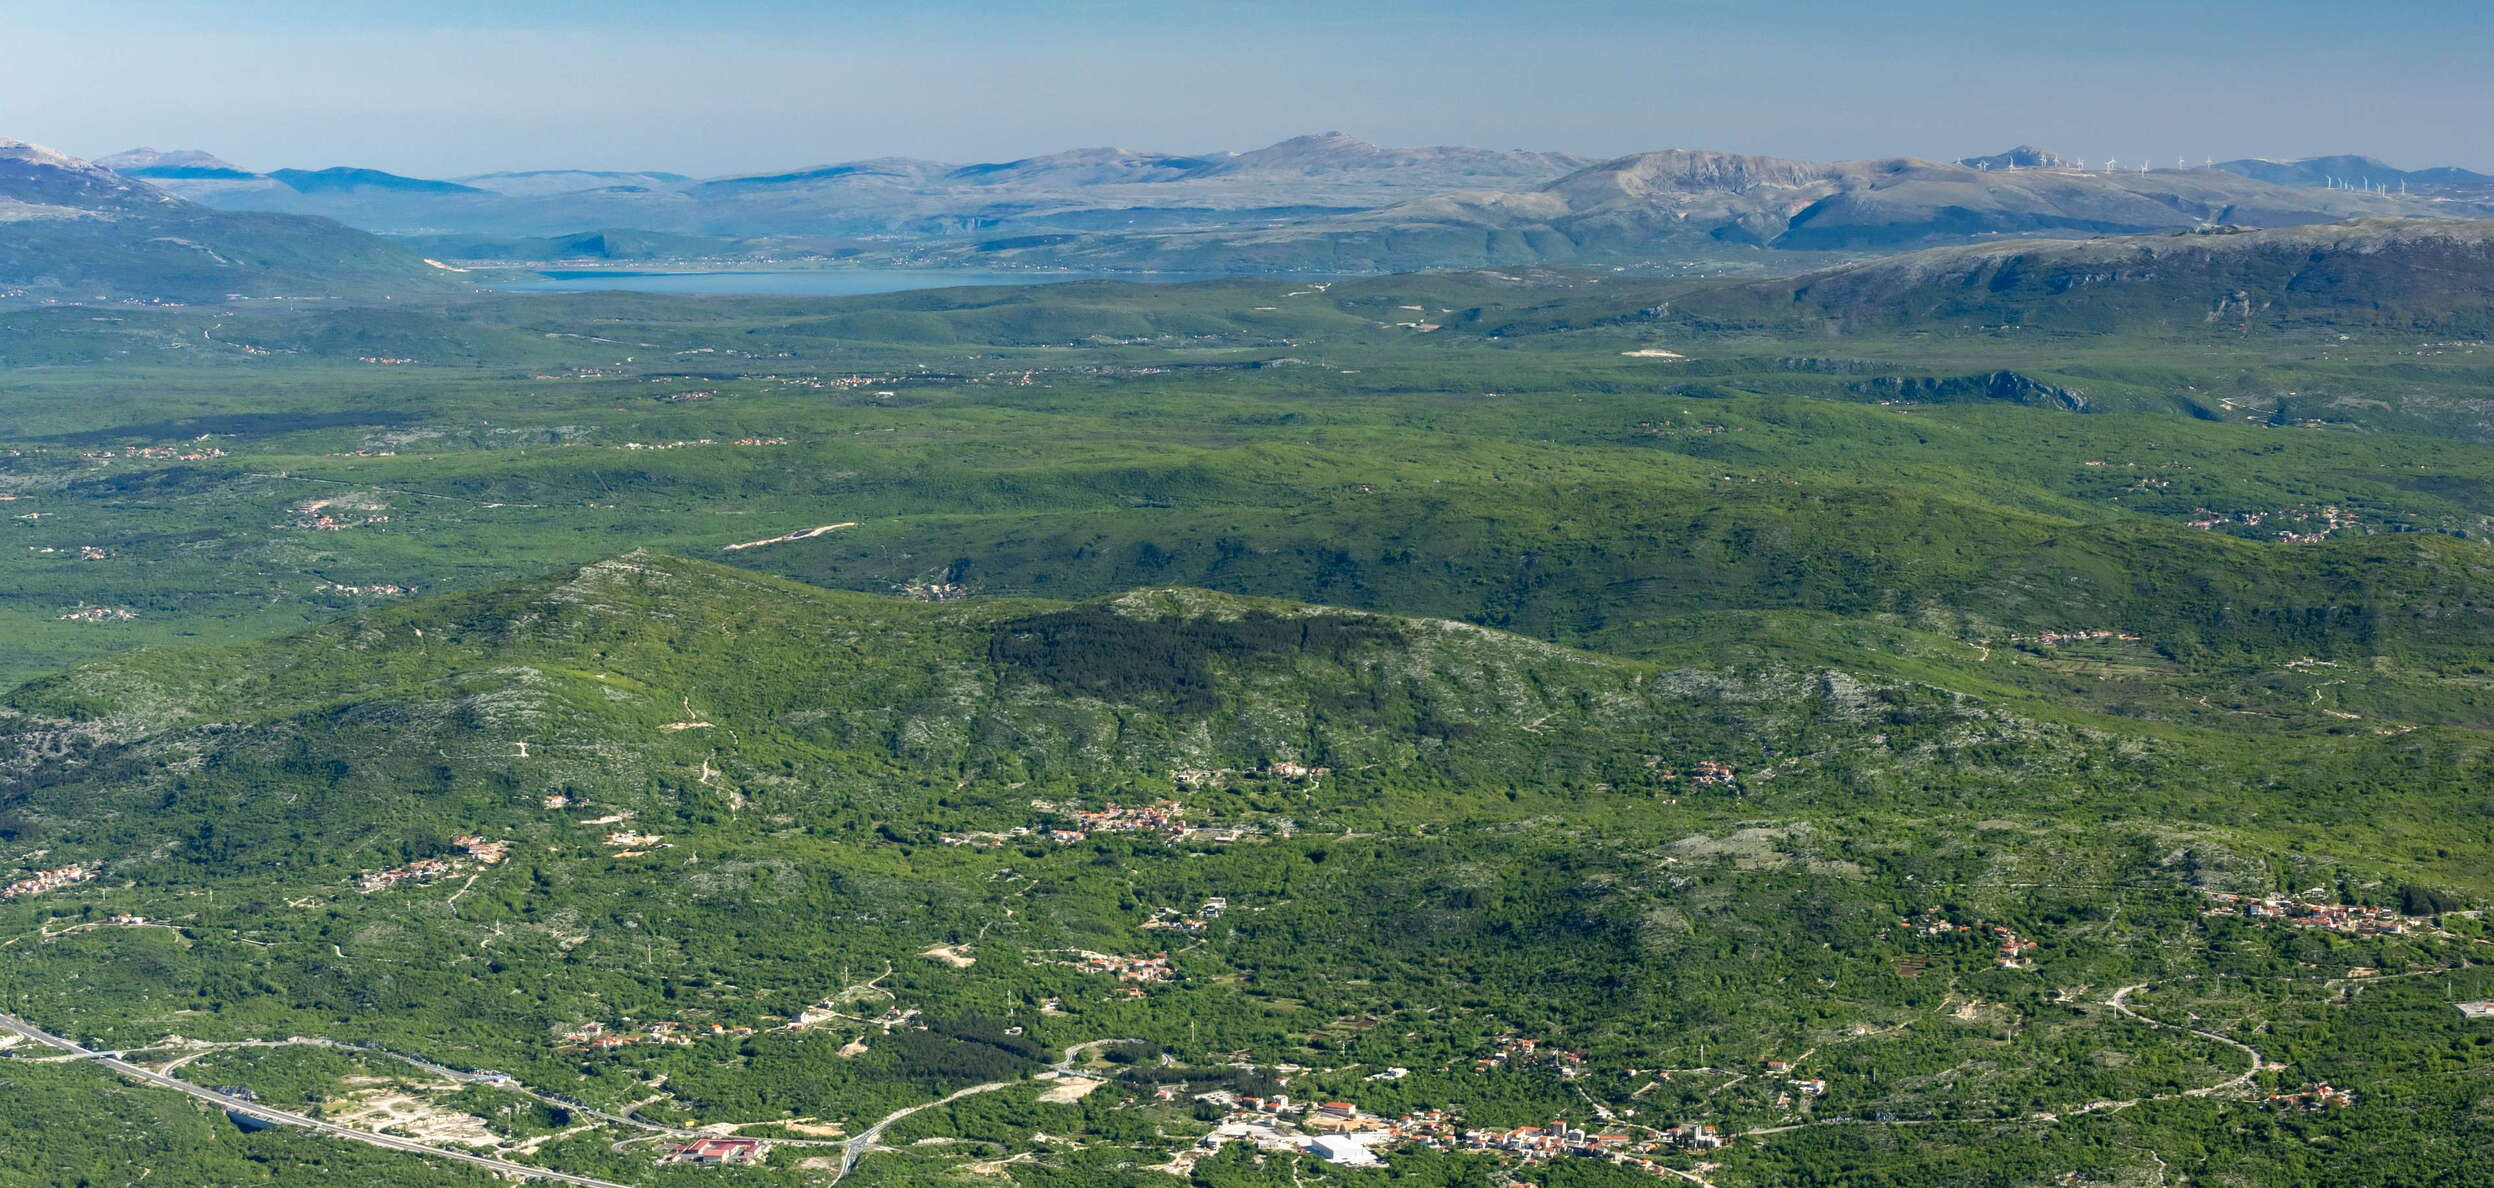 Dinaric karst landscape with Buško jezero and Cincar